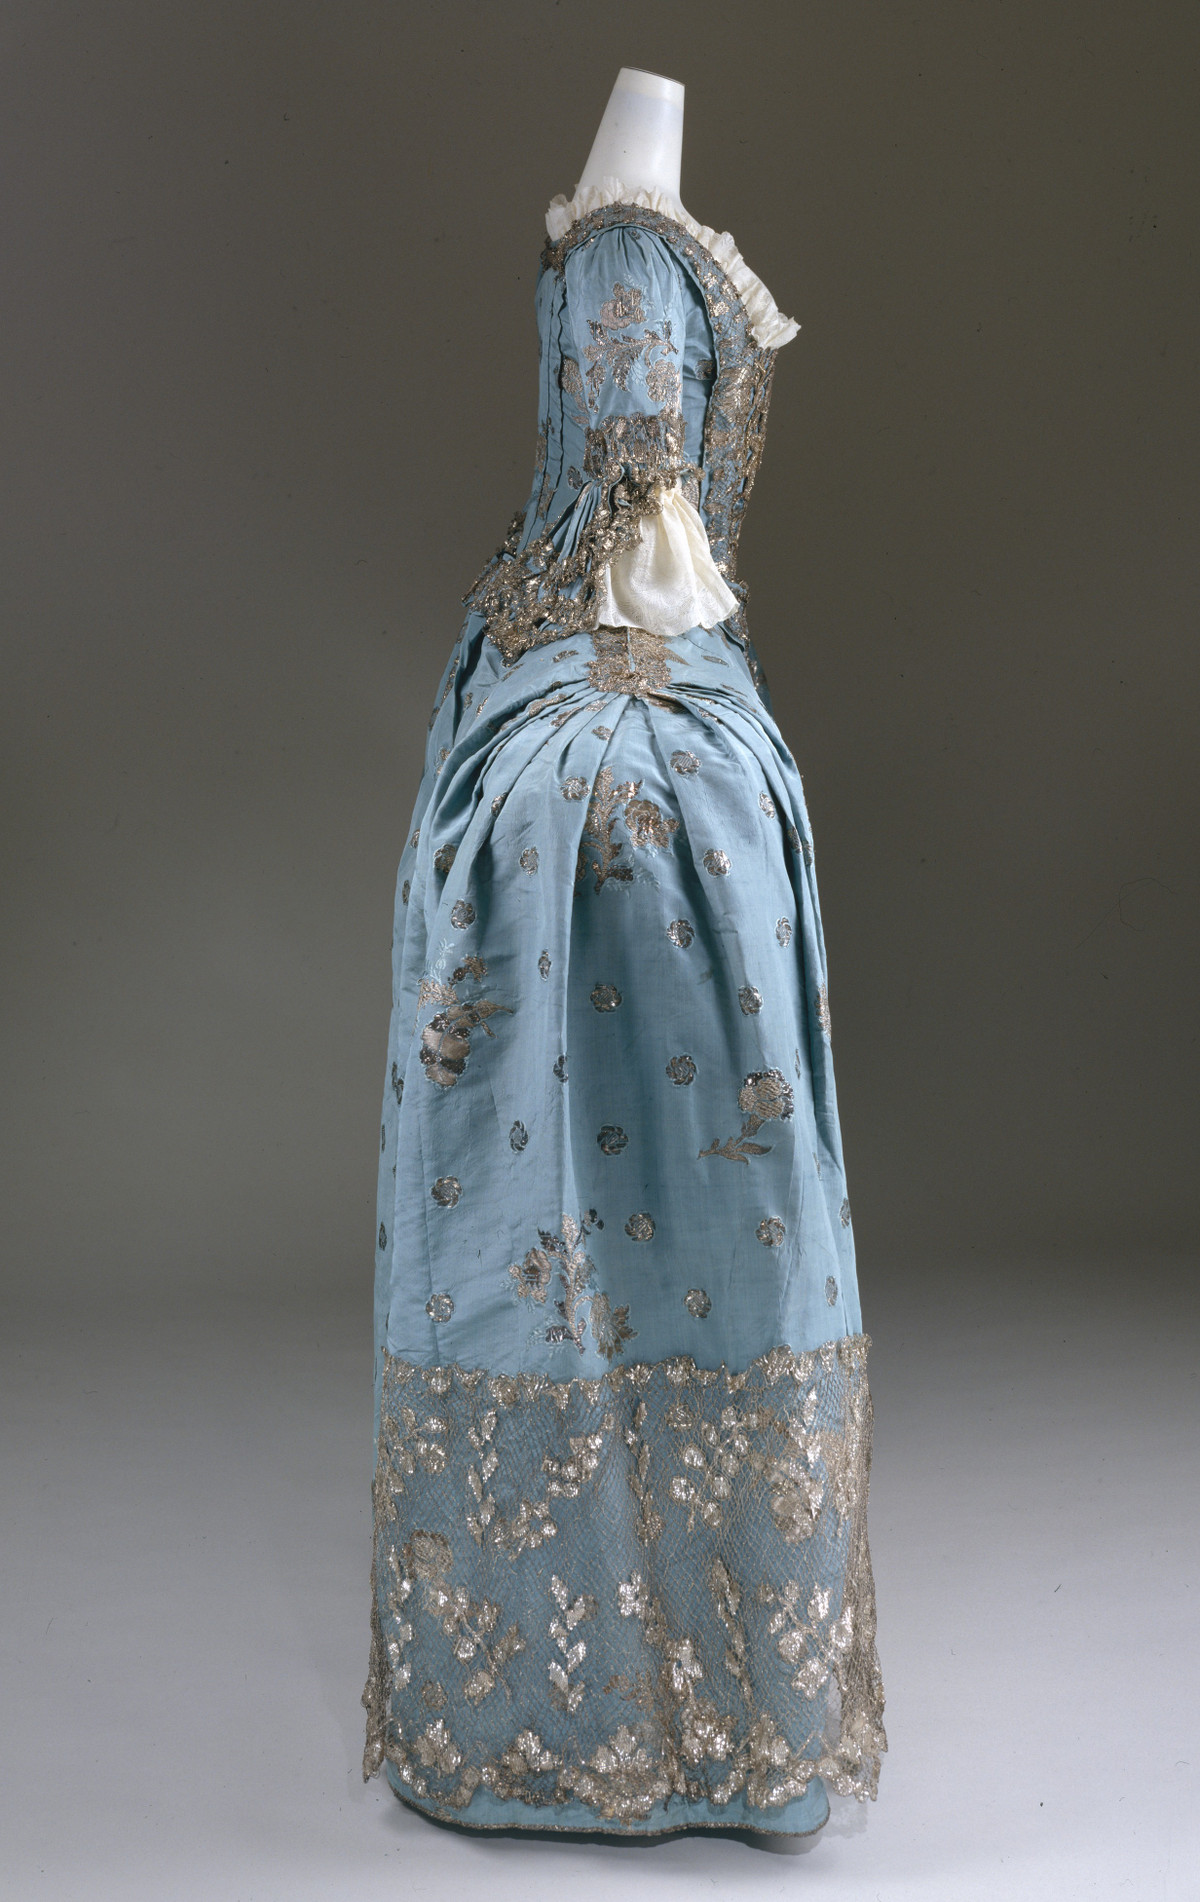 c. 1750. Court dress. British. Silk, metallic thread. metmuseum